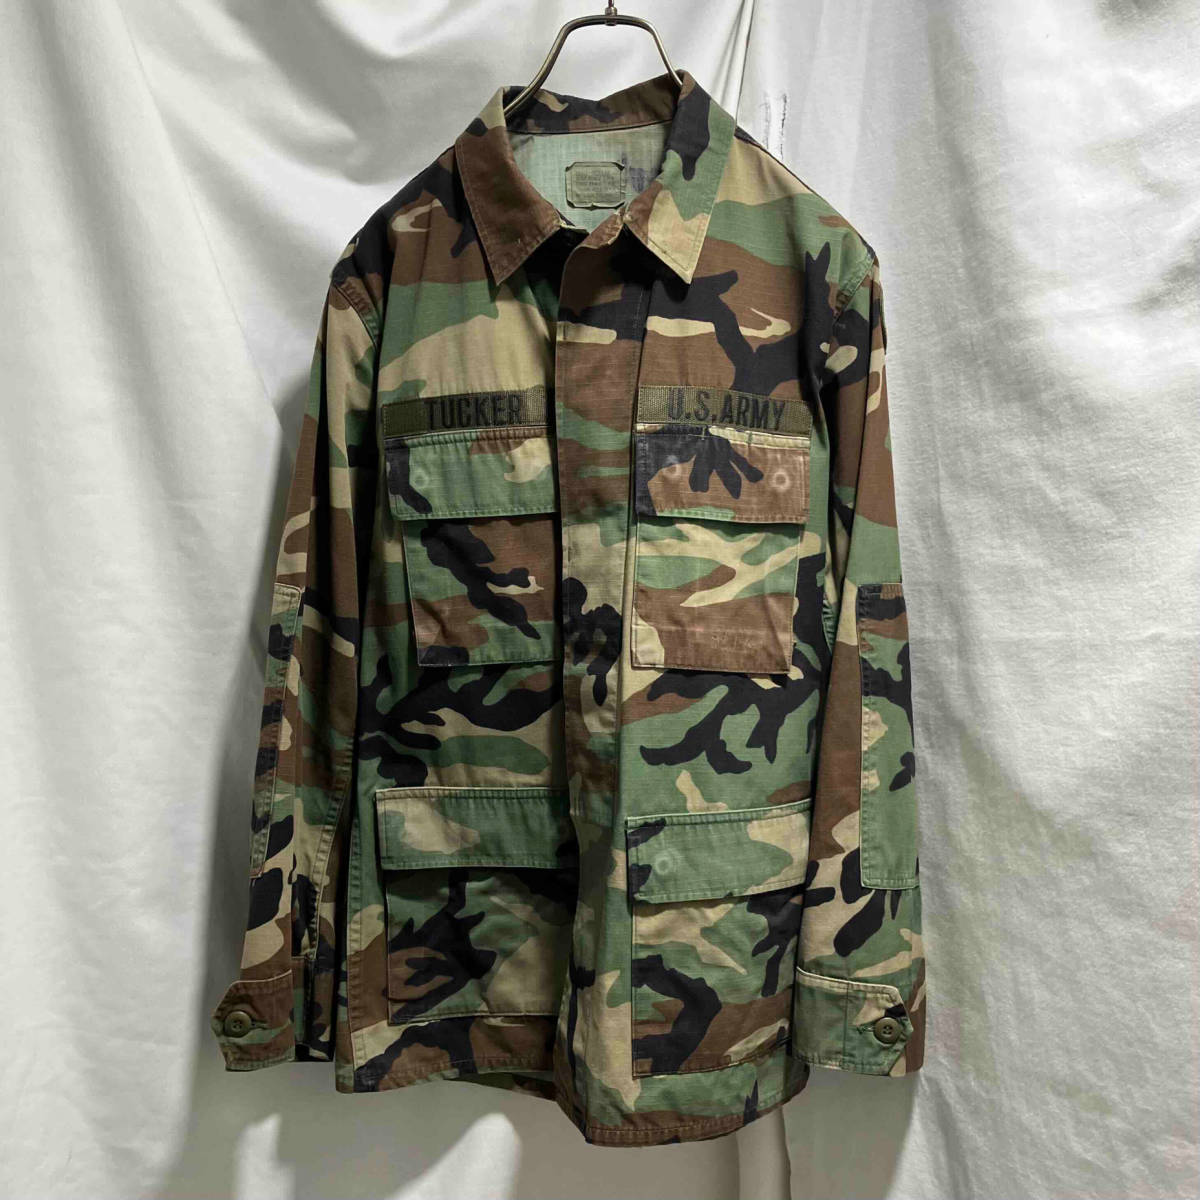 US ARMY military jacket カモ柄ミリタリージャケット ユーエスアーミー 店舗受取可